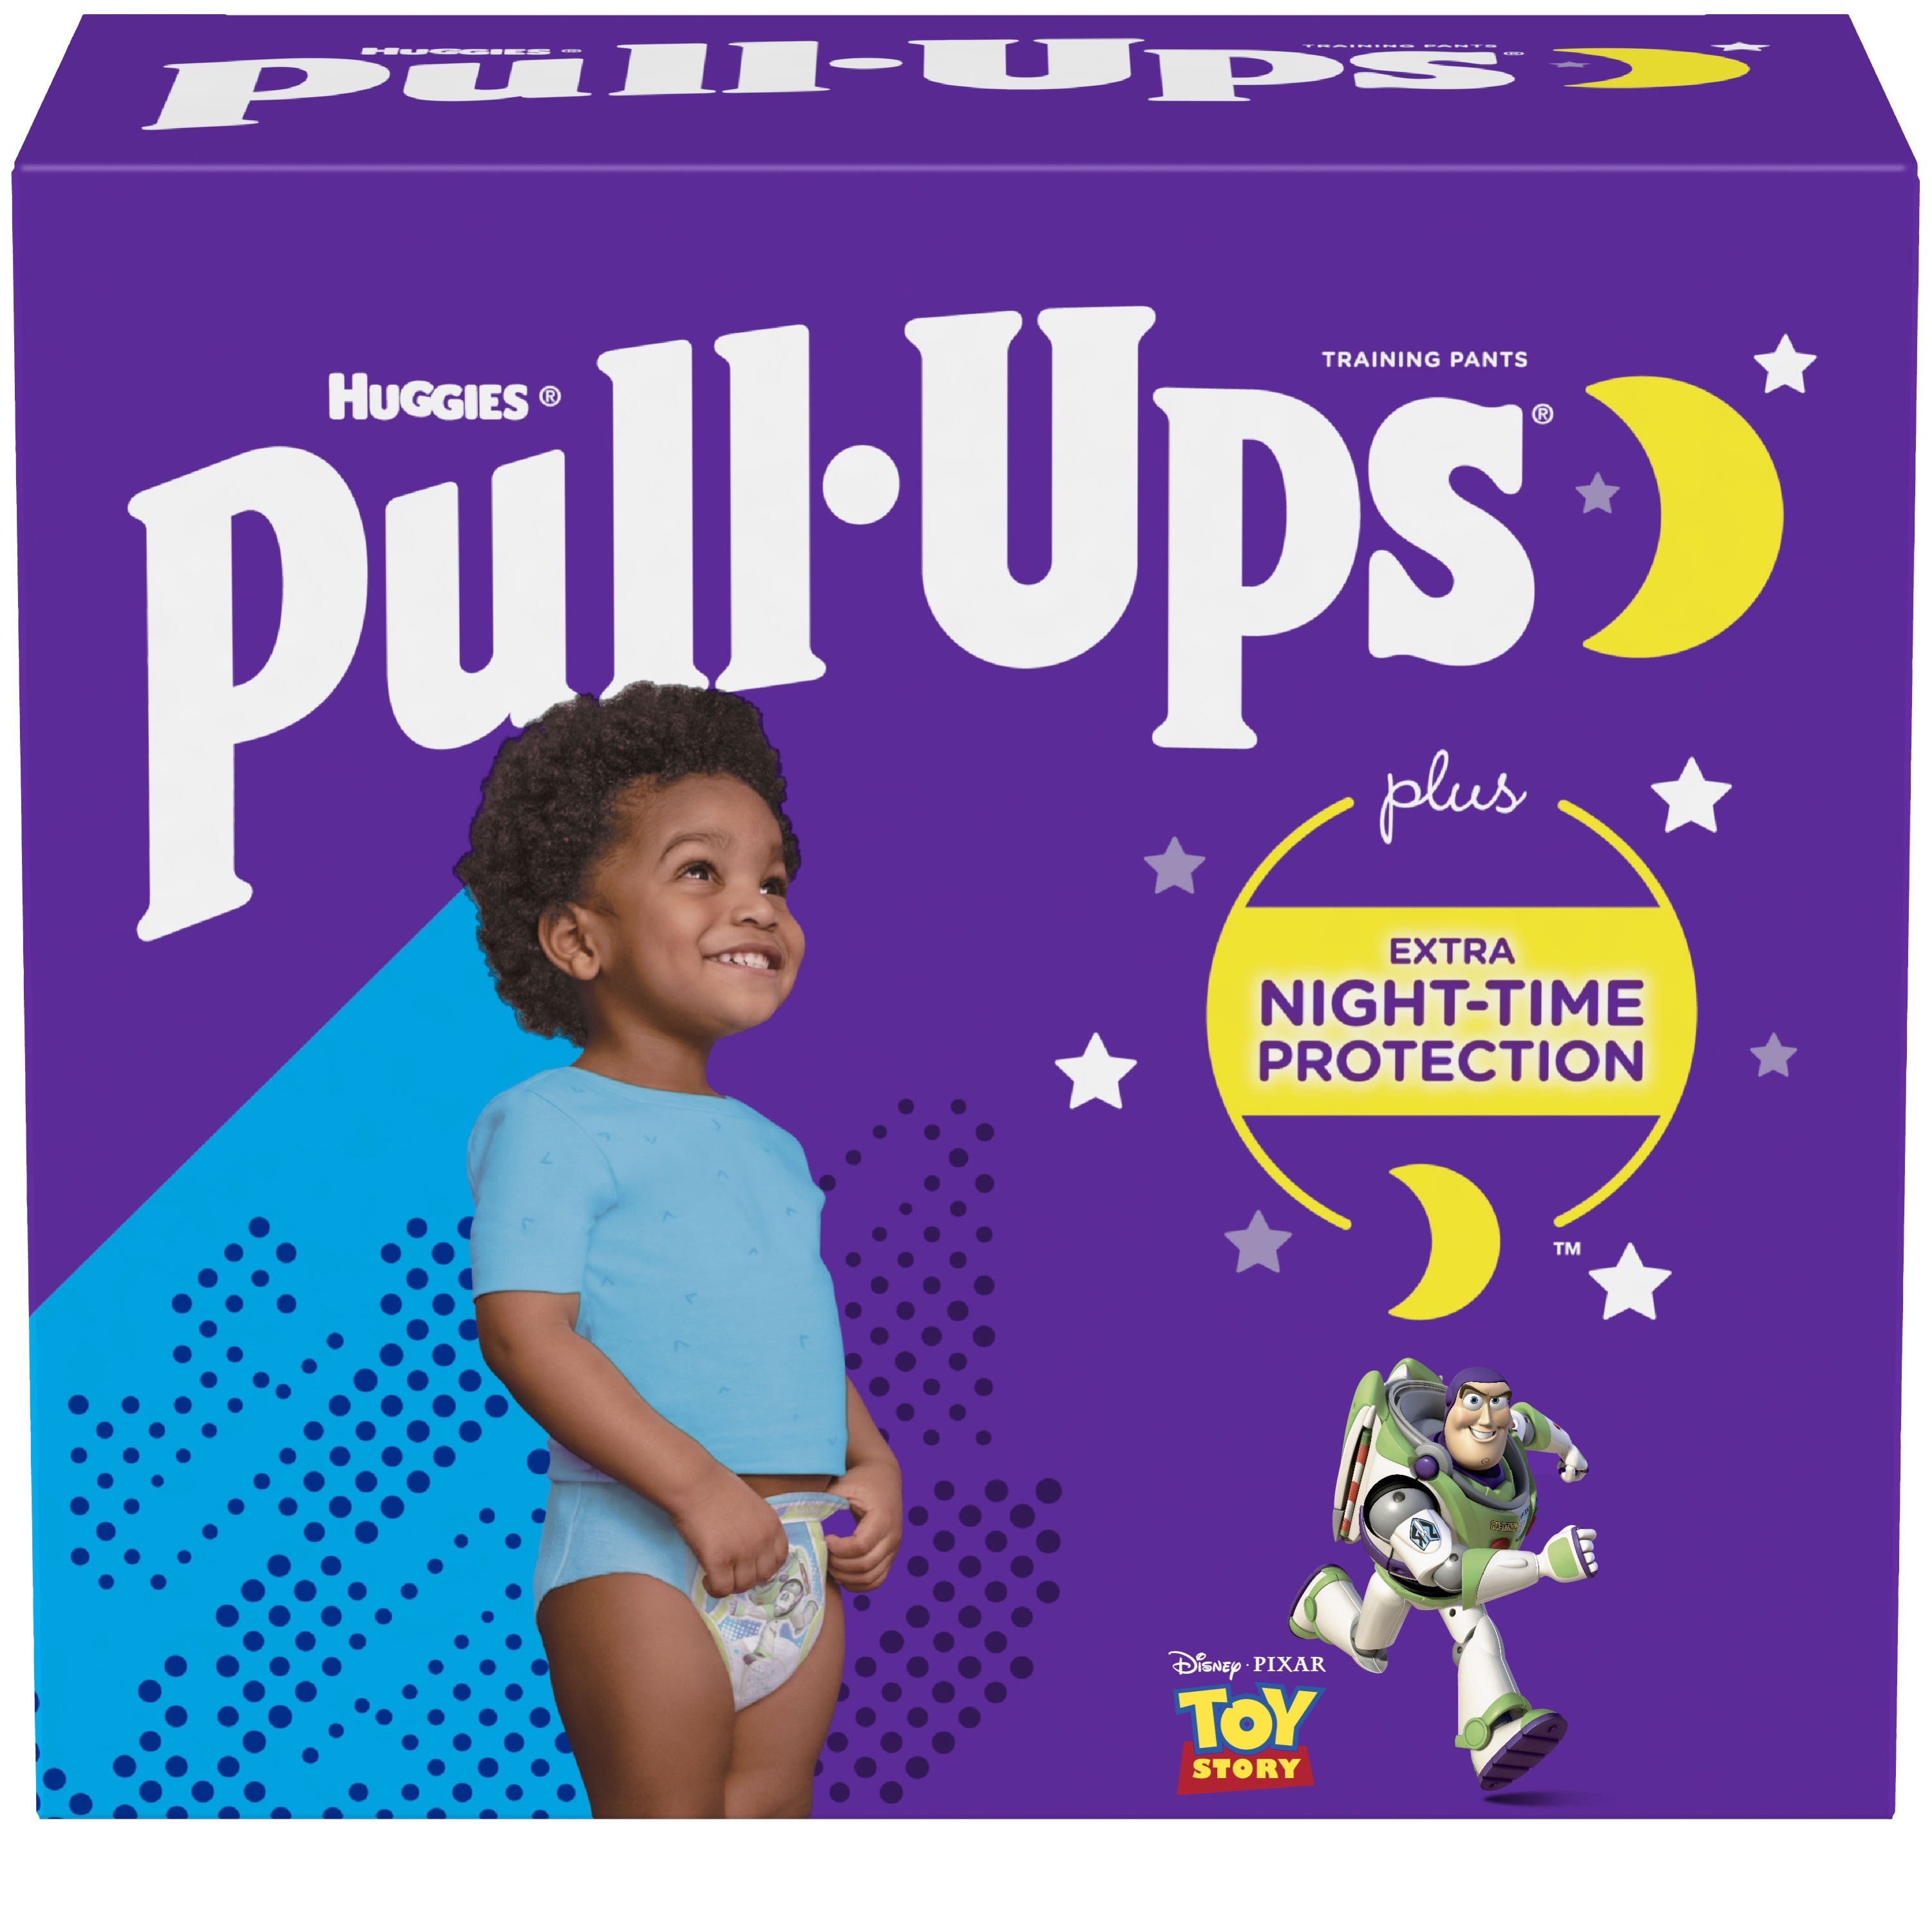 Huggies® Pull-Ups® Night*Time Training Pants for Girls/Boys